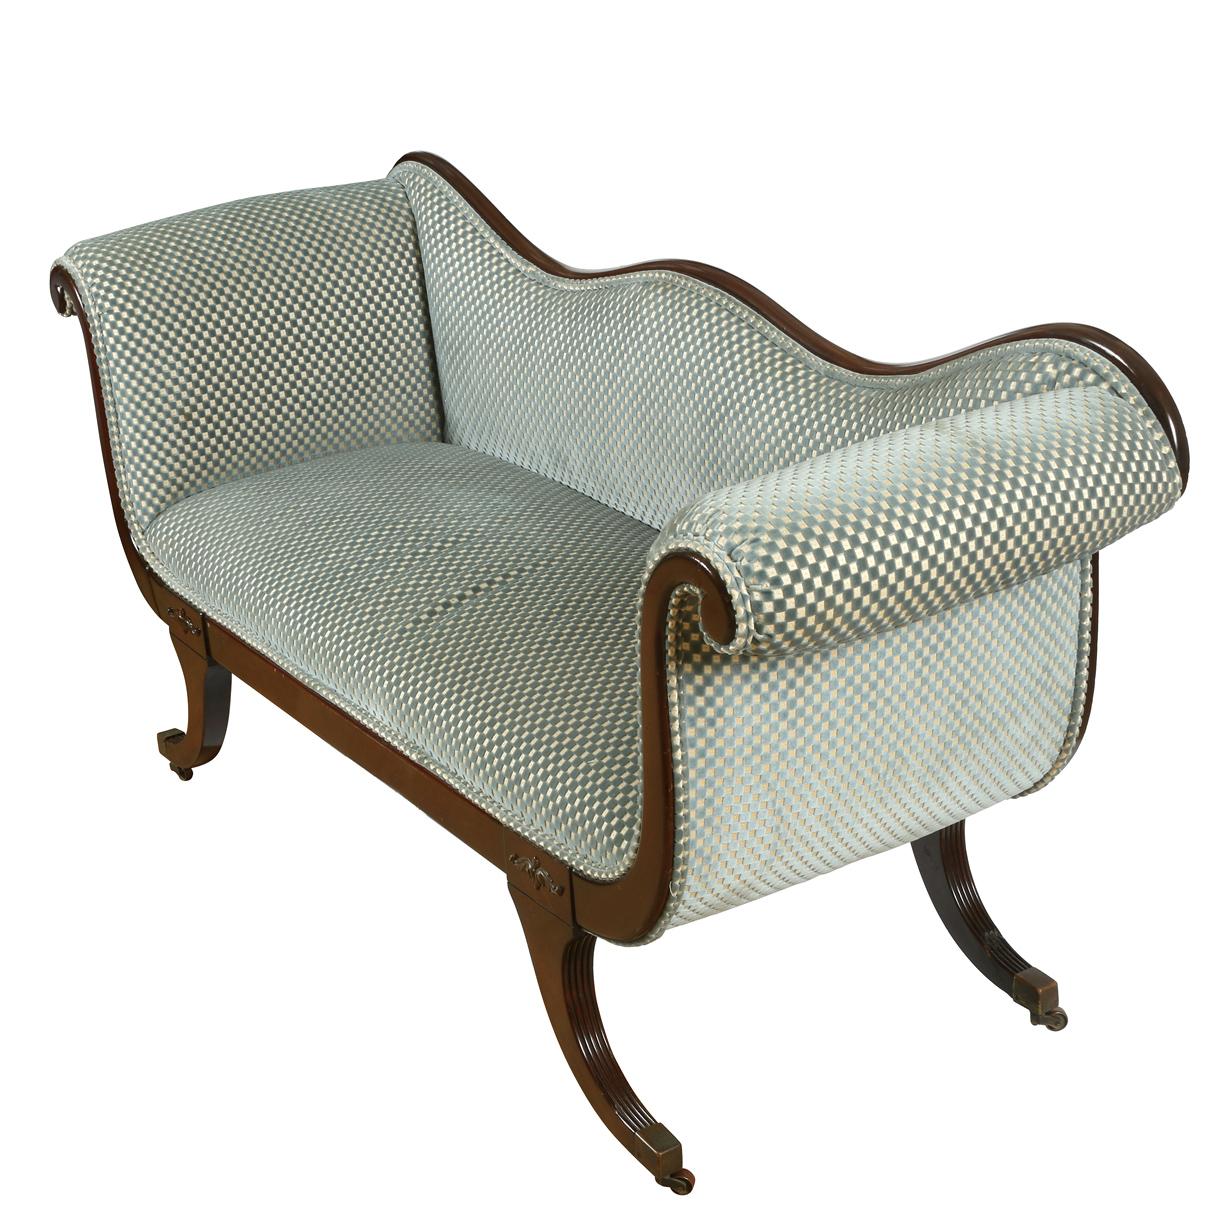 Clarence House blue velvet upholstered Recamier sofa with curved wood frame.